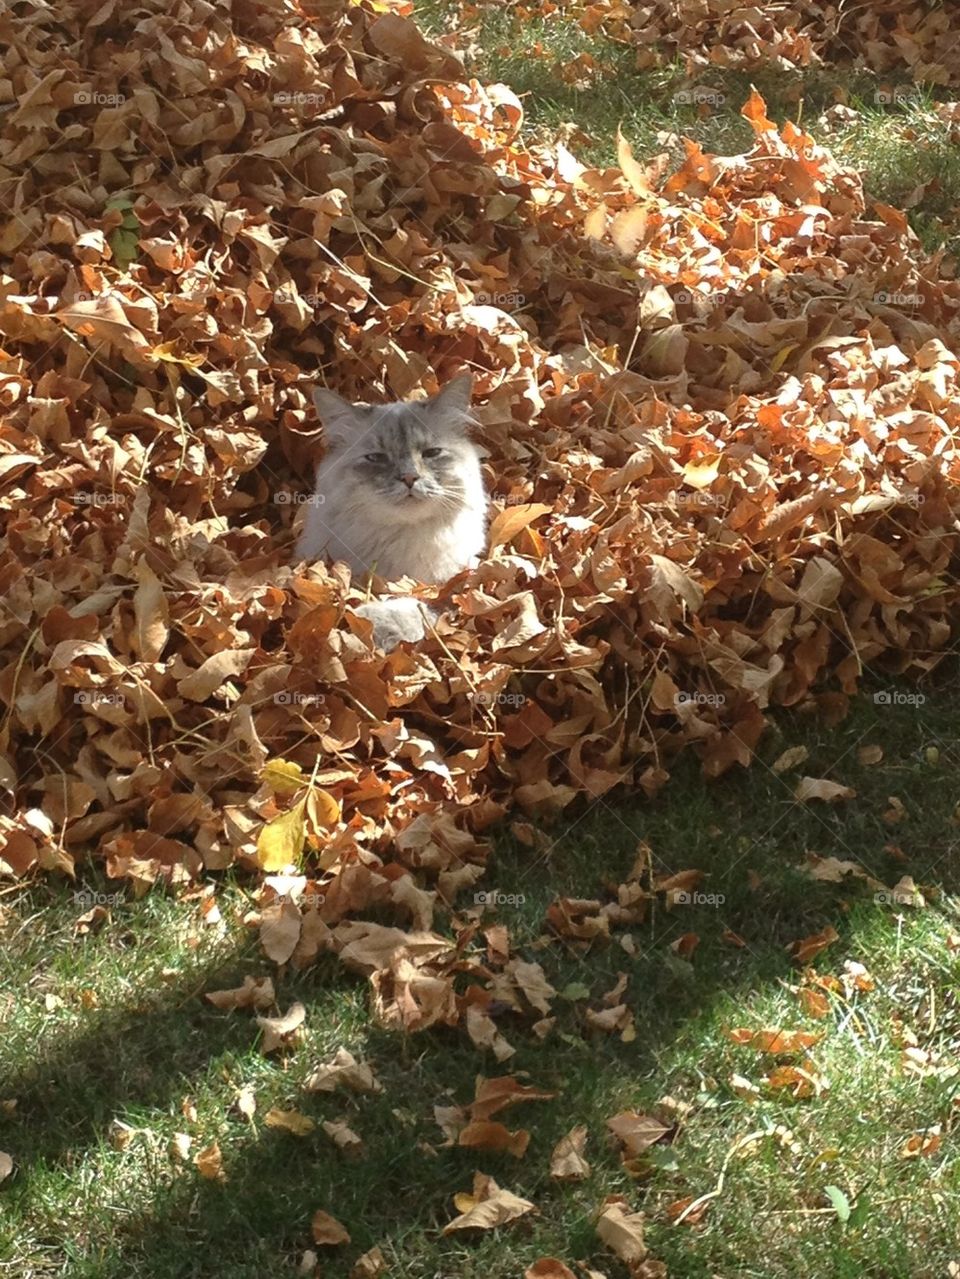 Cat in the Leaf Pile